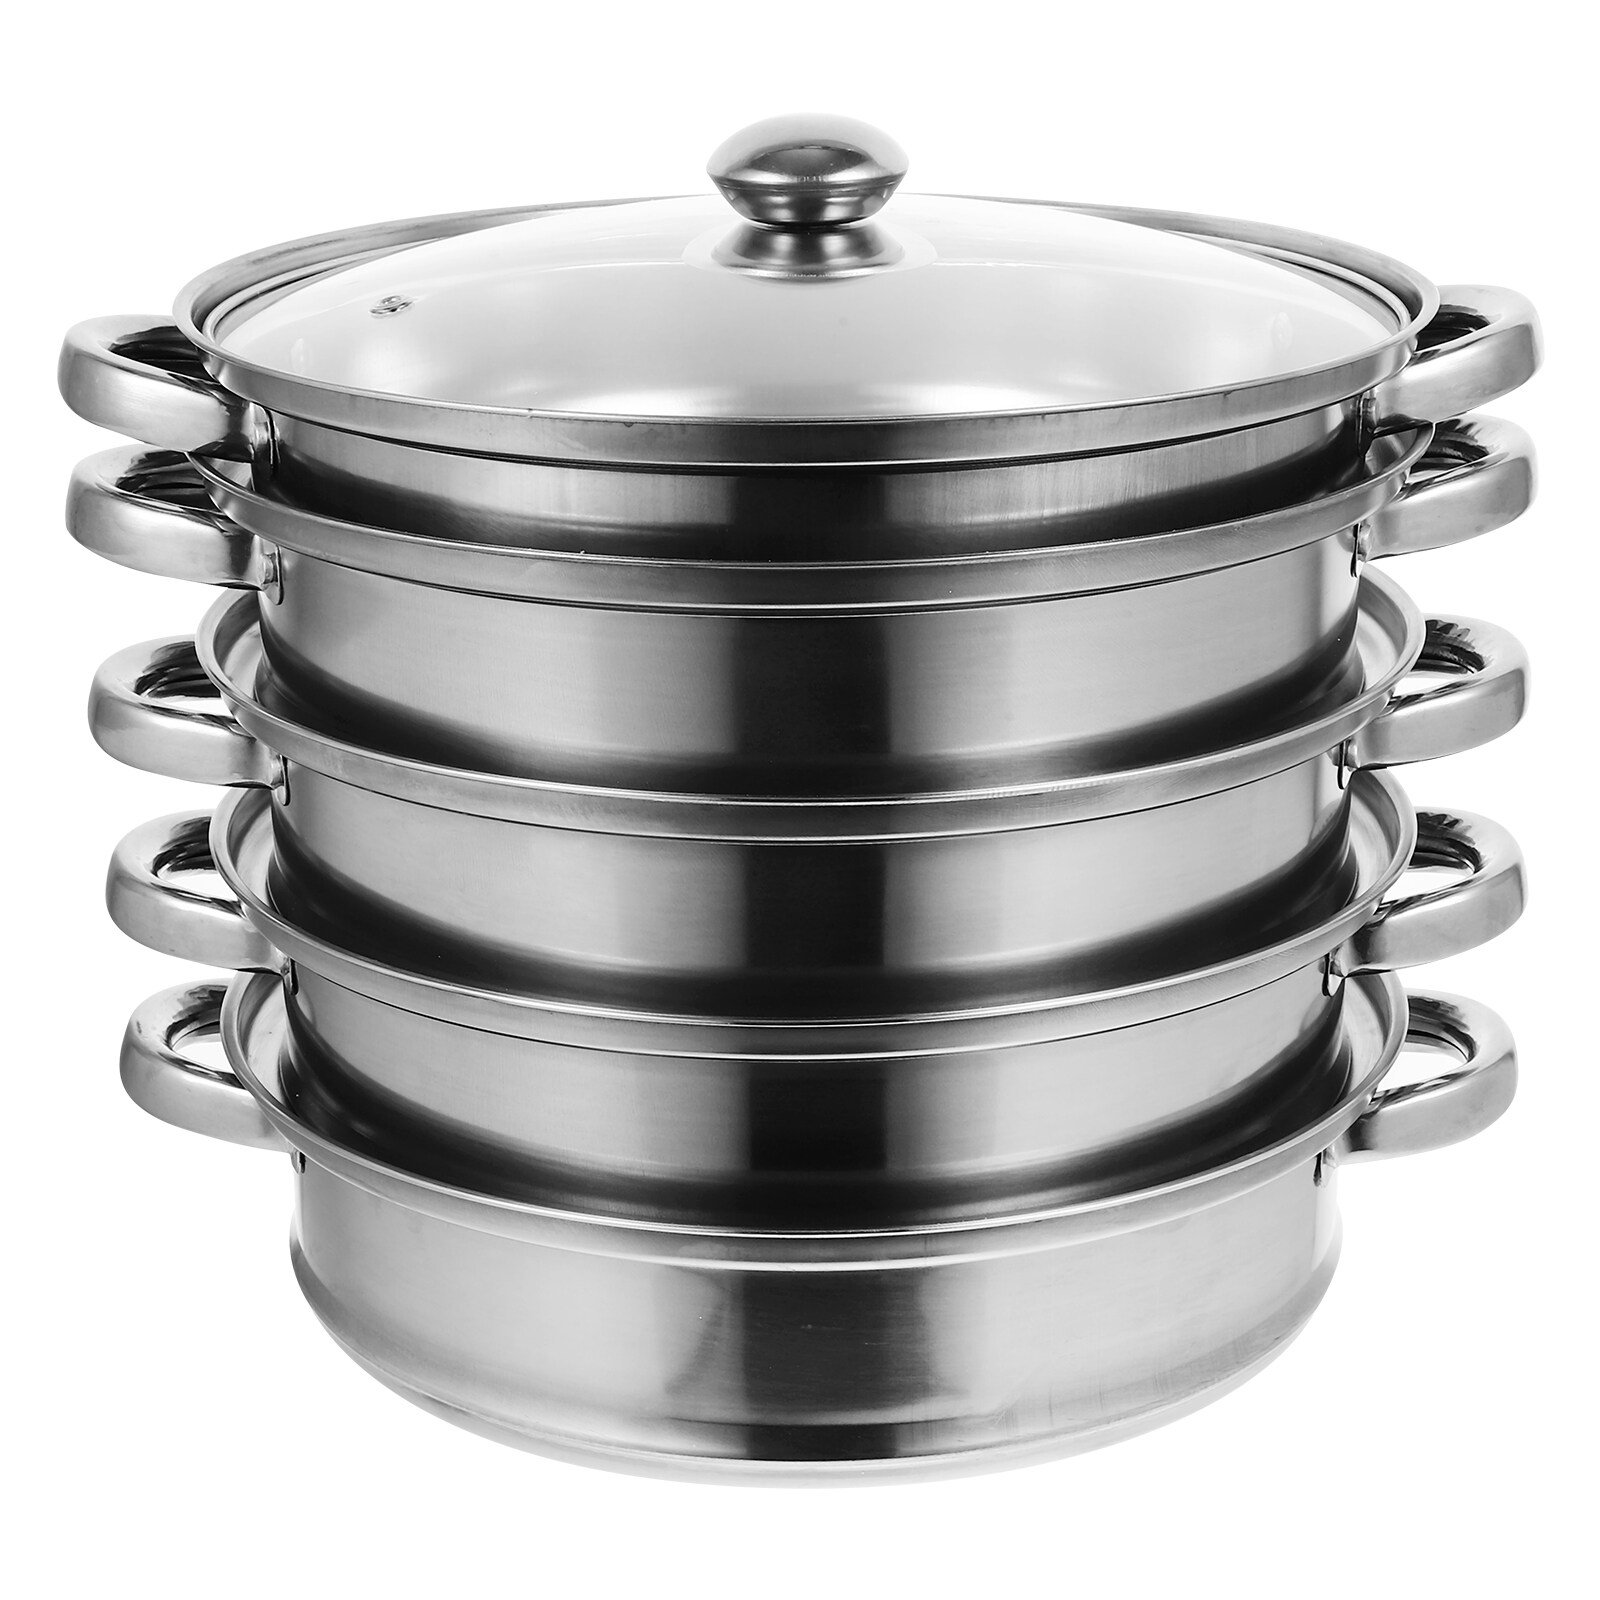 Farberware - Stainless Steel Vegetable Steamer Basket